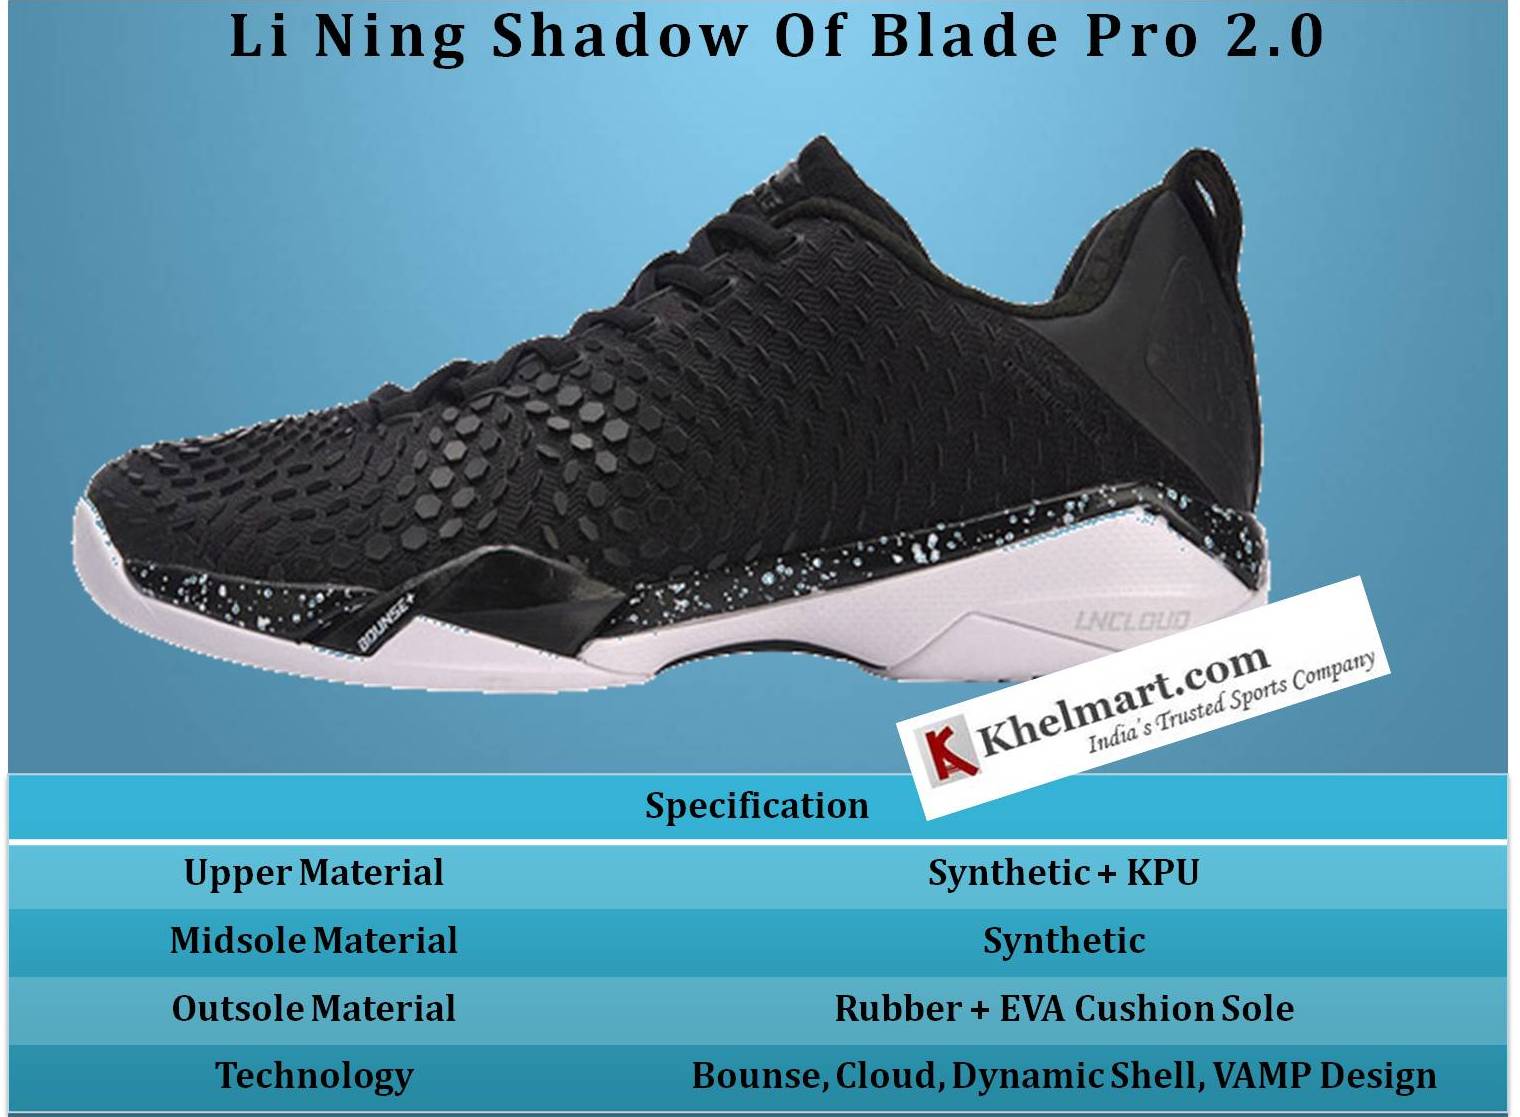 Li_Ning_Shadow_of_Blade_Pro_2.0_Badminton_Shoes_Specification_Khelmart